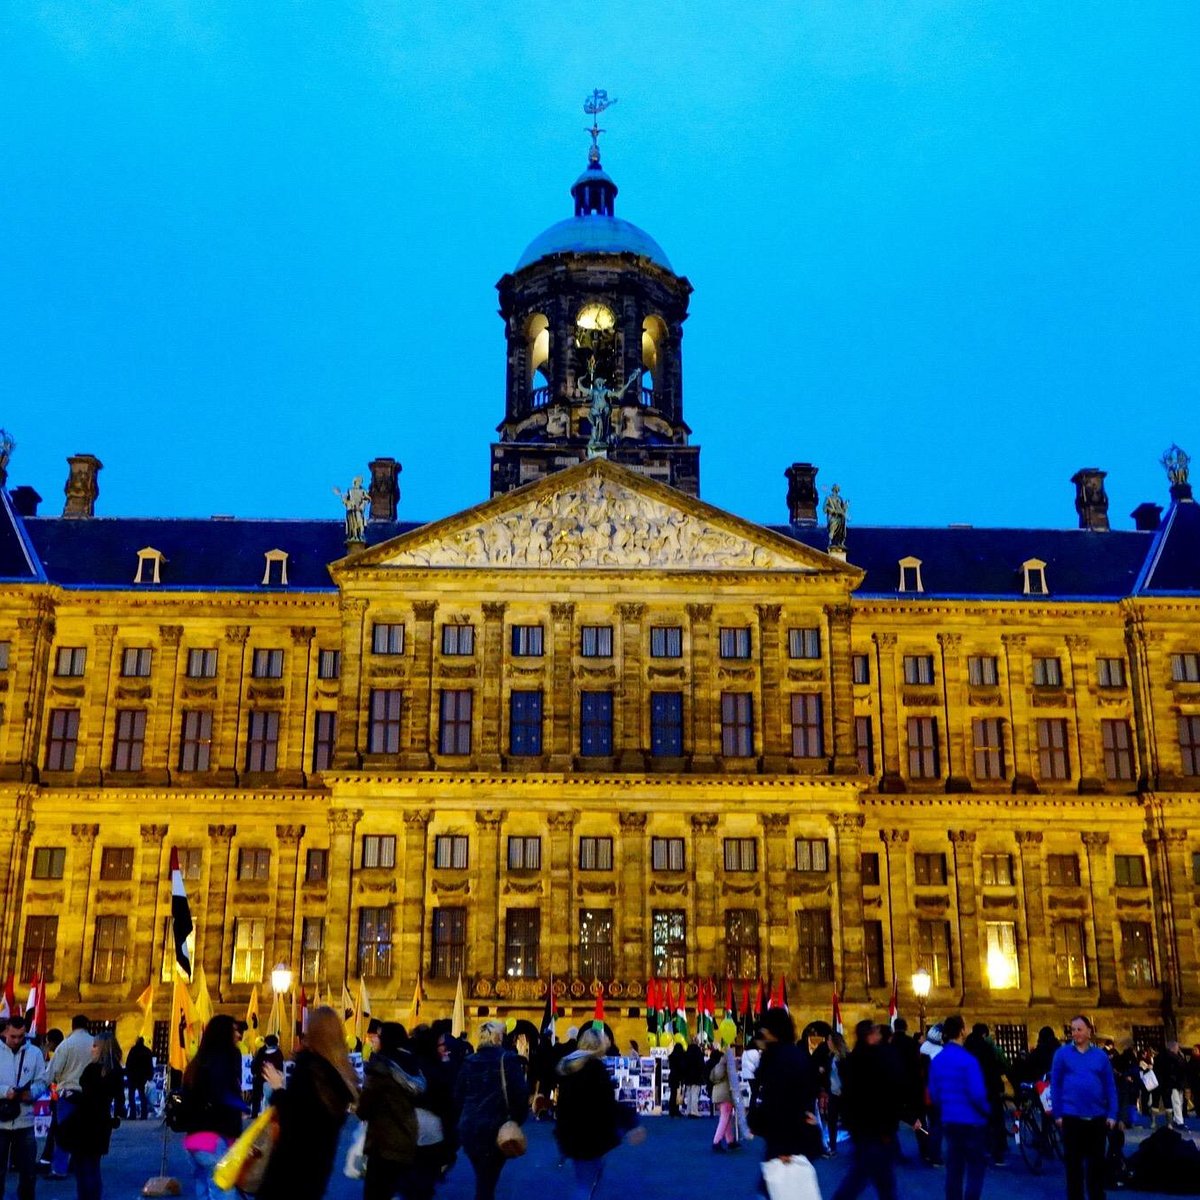 tour royal palace amsterdam